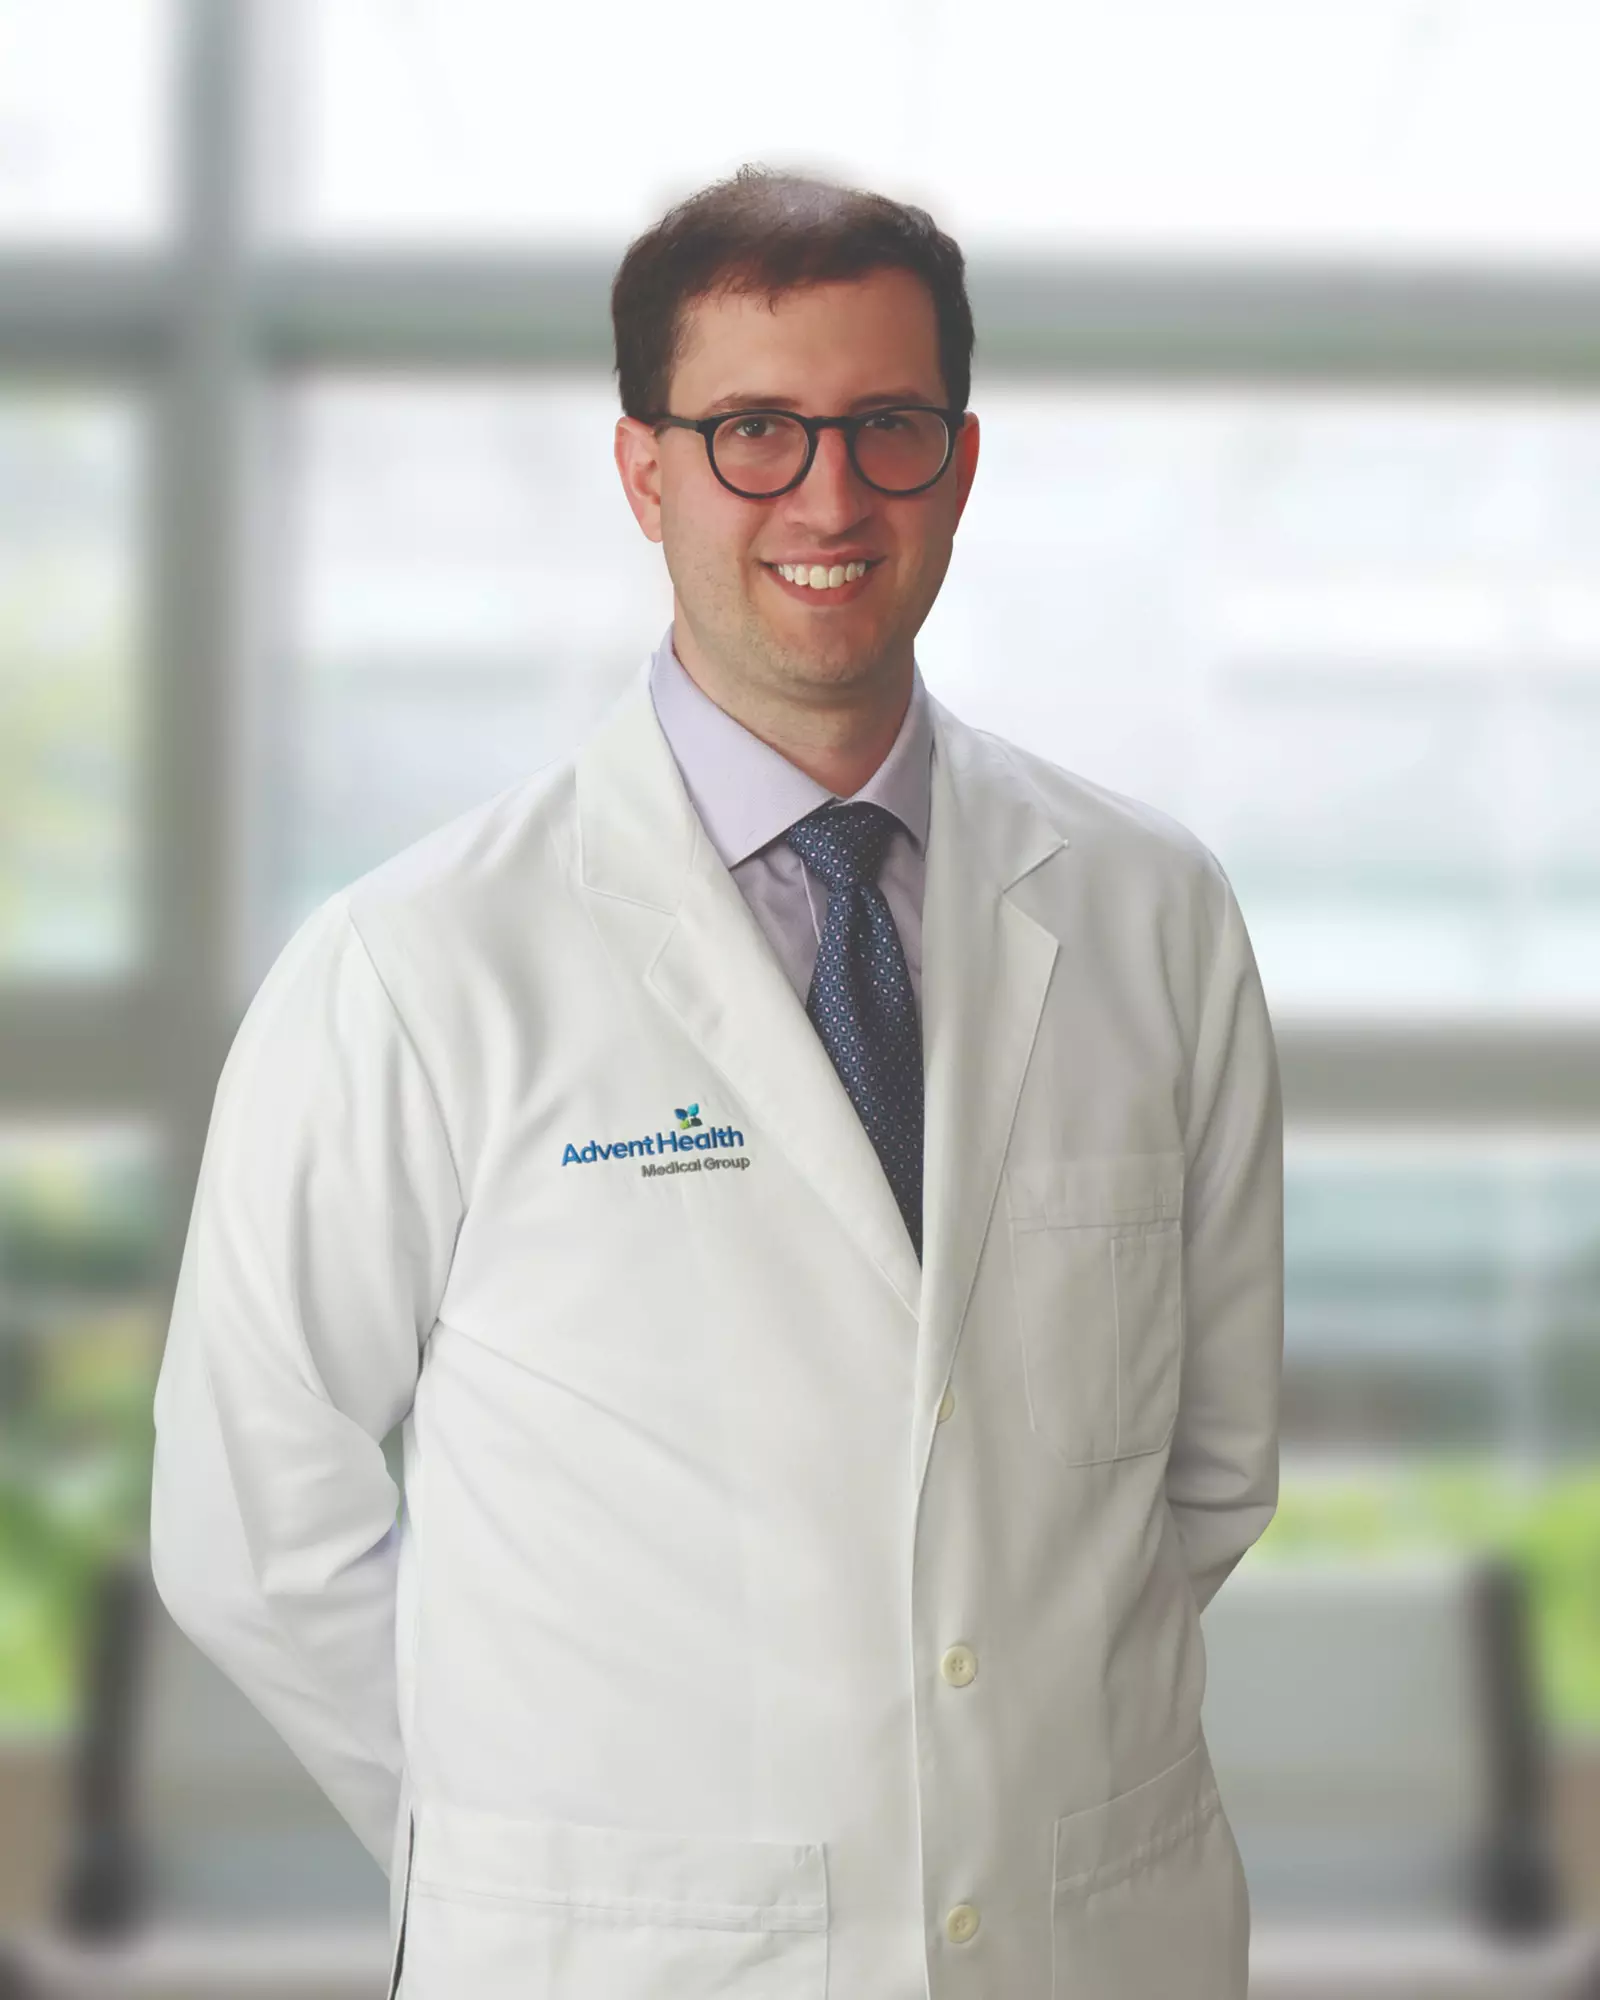 Cardiothoracic surgeon Dr. Andrew Everett